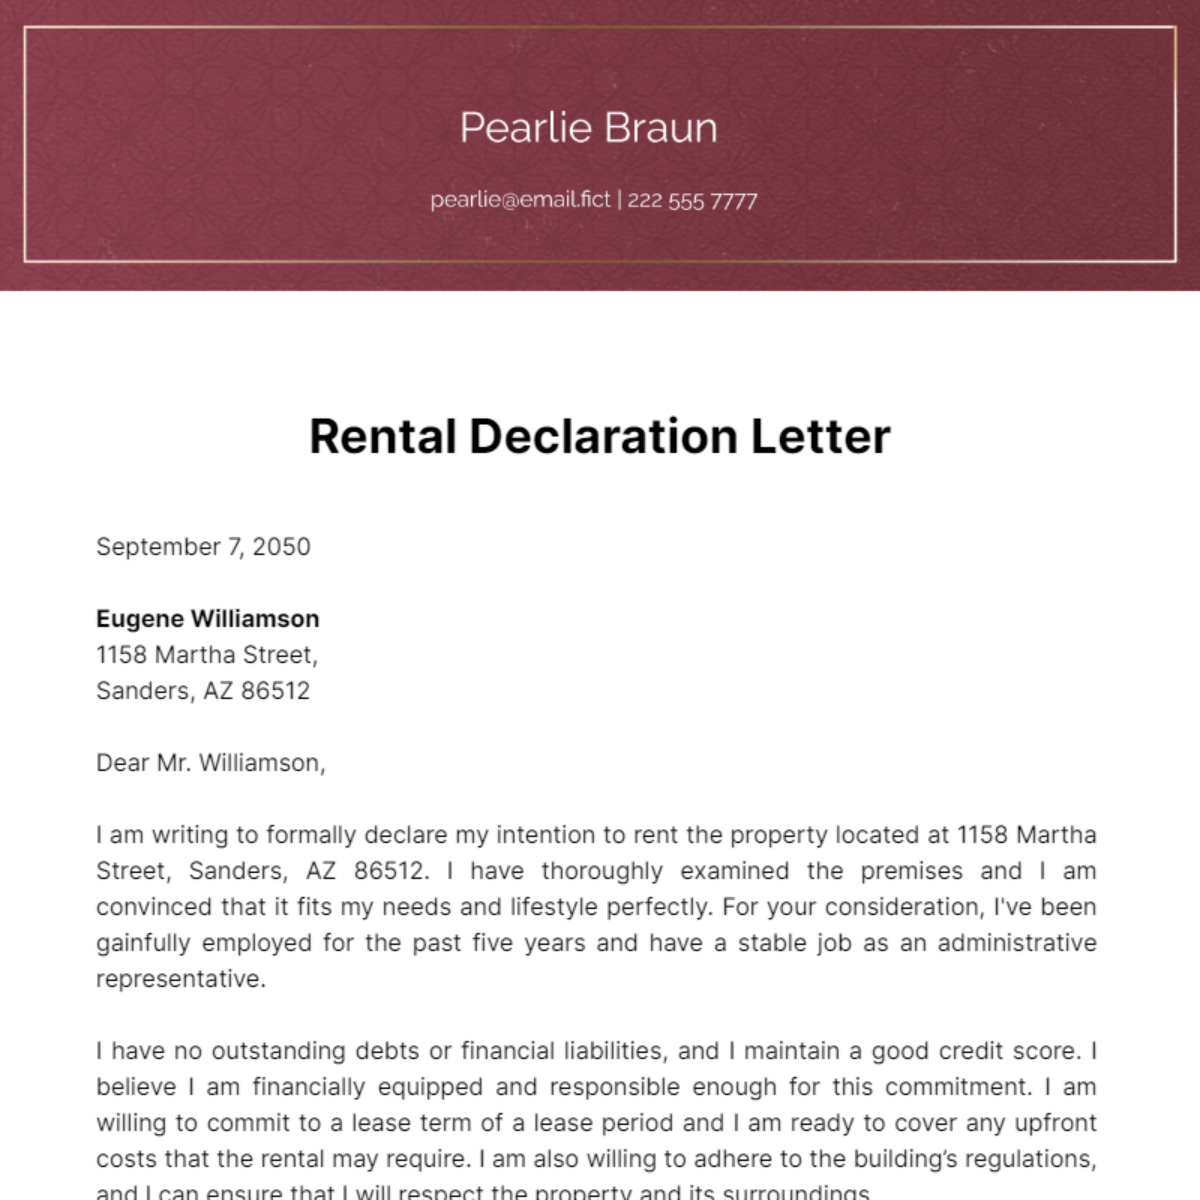 Rental Declaration Letter Template